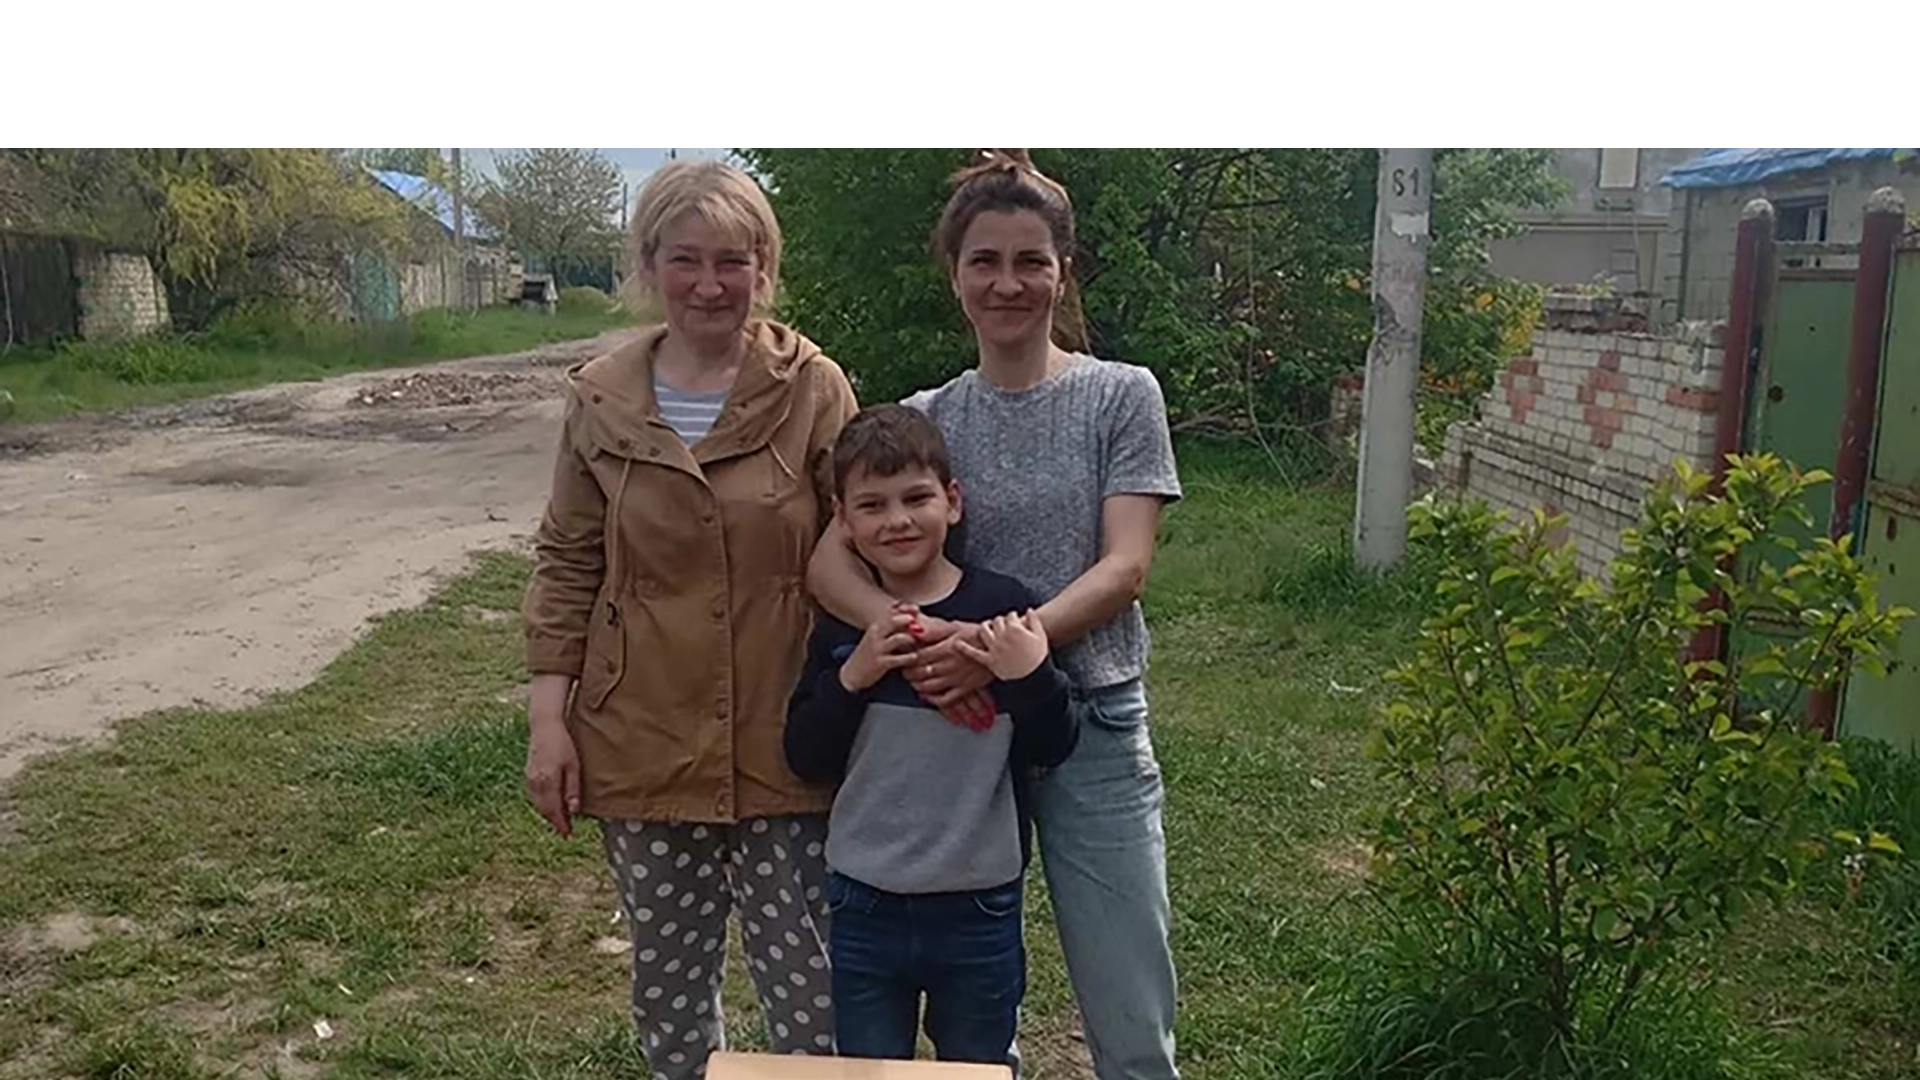 iLoveUkraine delivering humanitarian aid to displaced families in ravaged Tishki suburbs of Kharkiv,Ukraine.